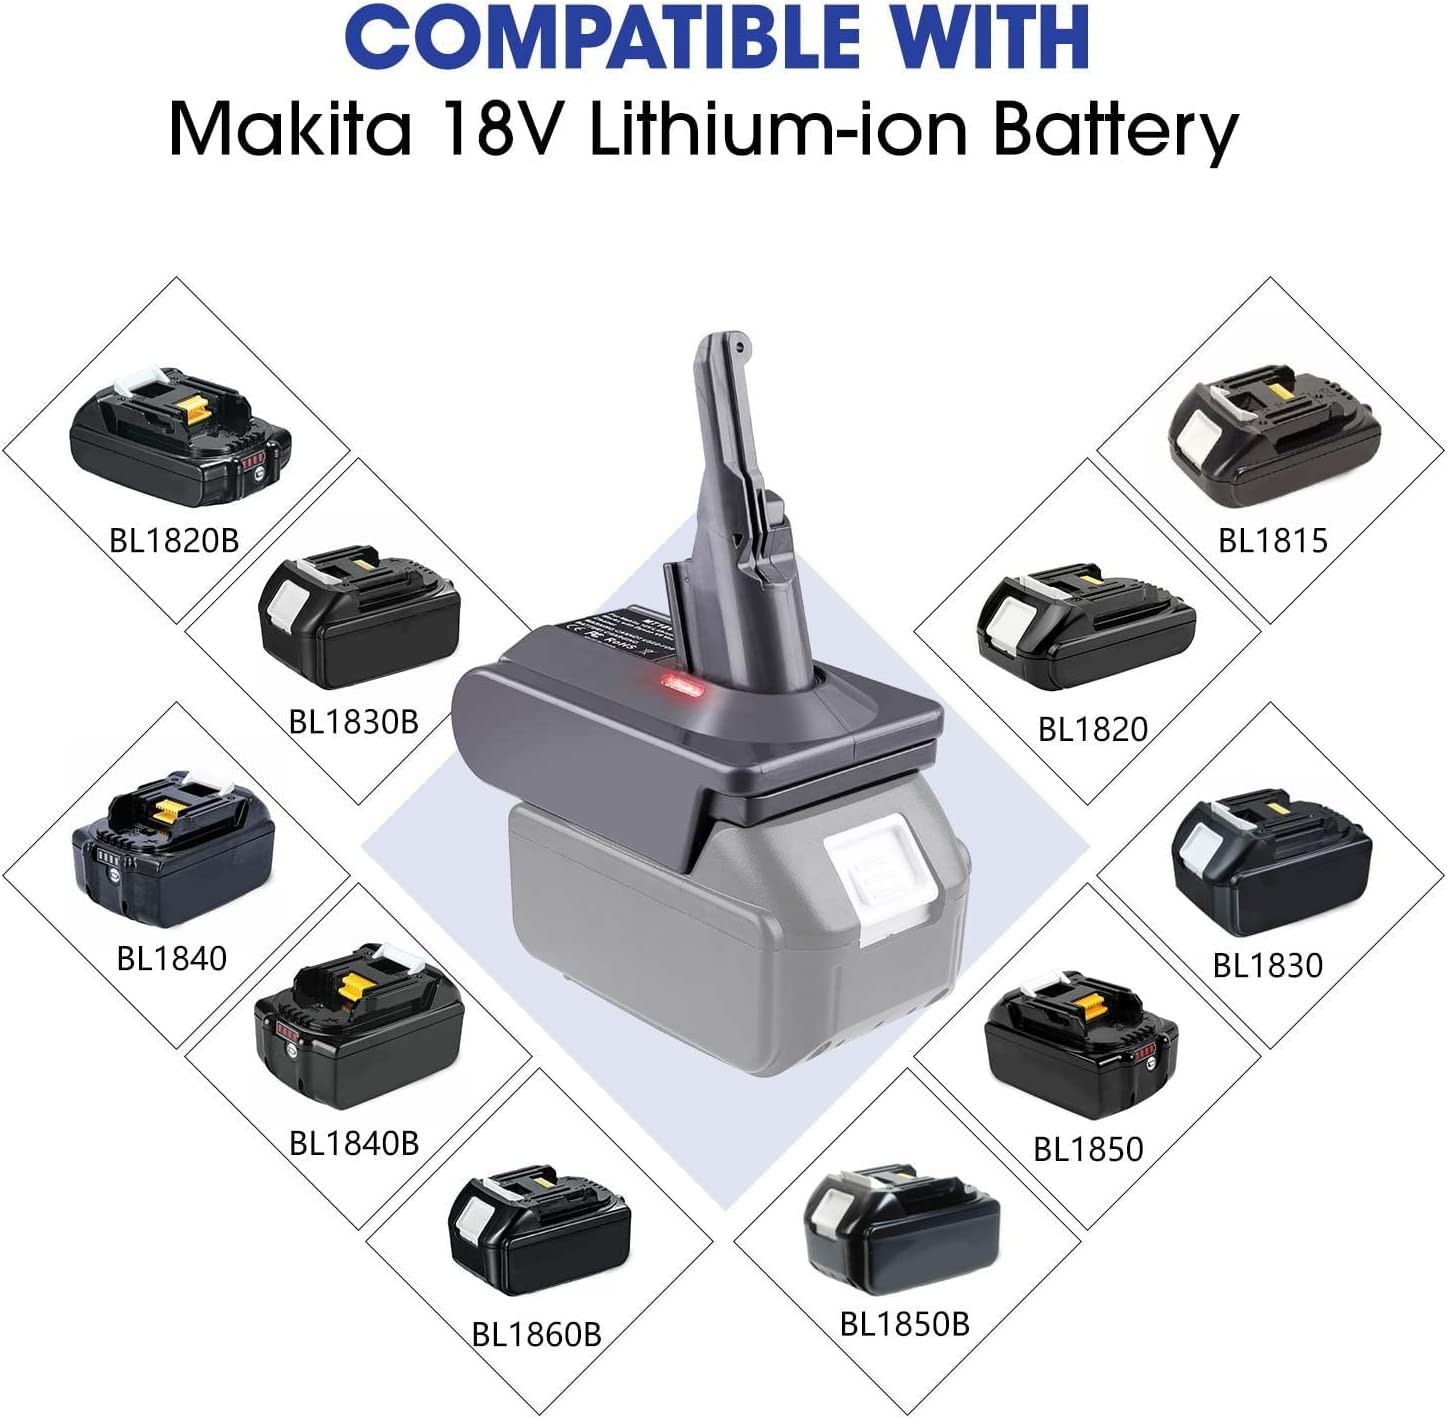 Dyson V7 Batterieadapter für Makita 18V Lithiumbatterie